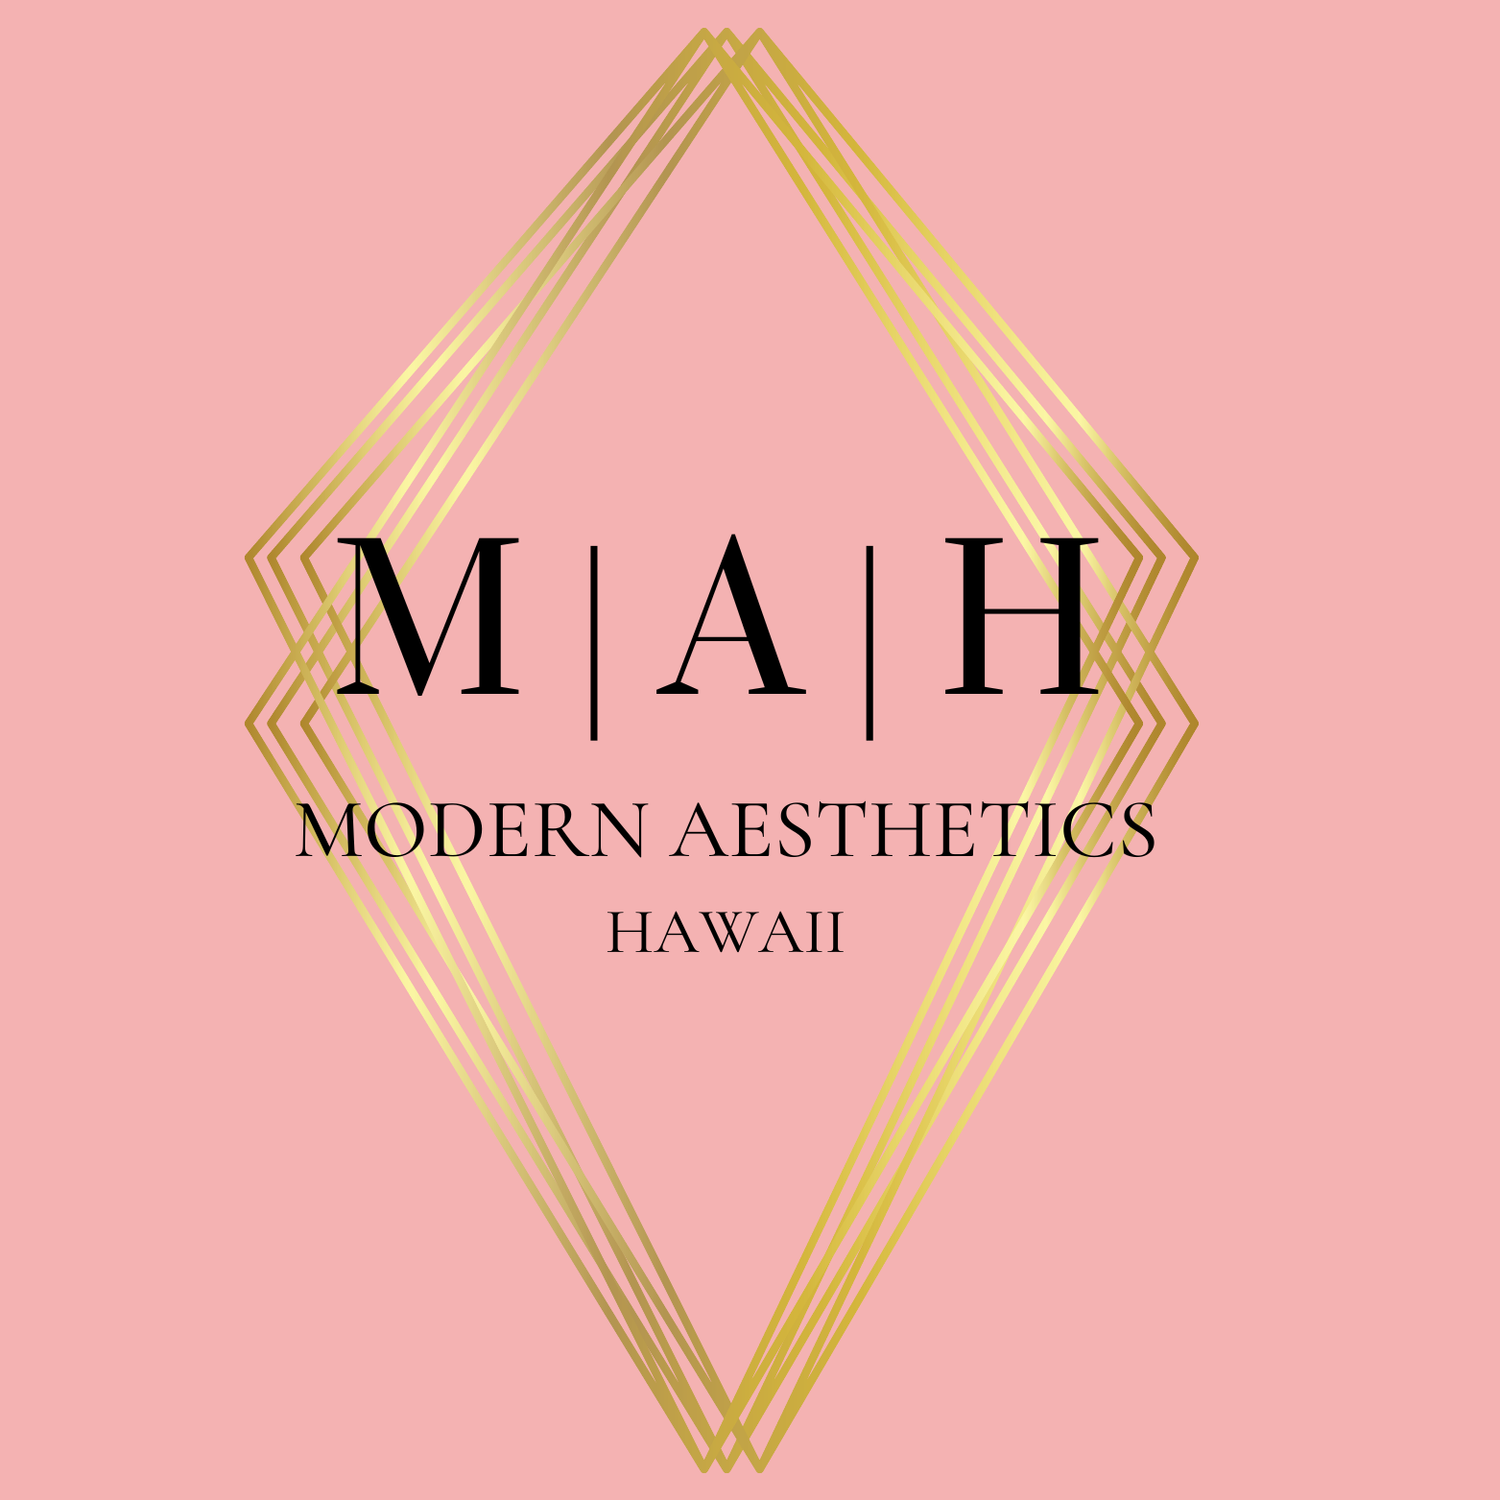 MODERN AESTHETICS HAWAII